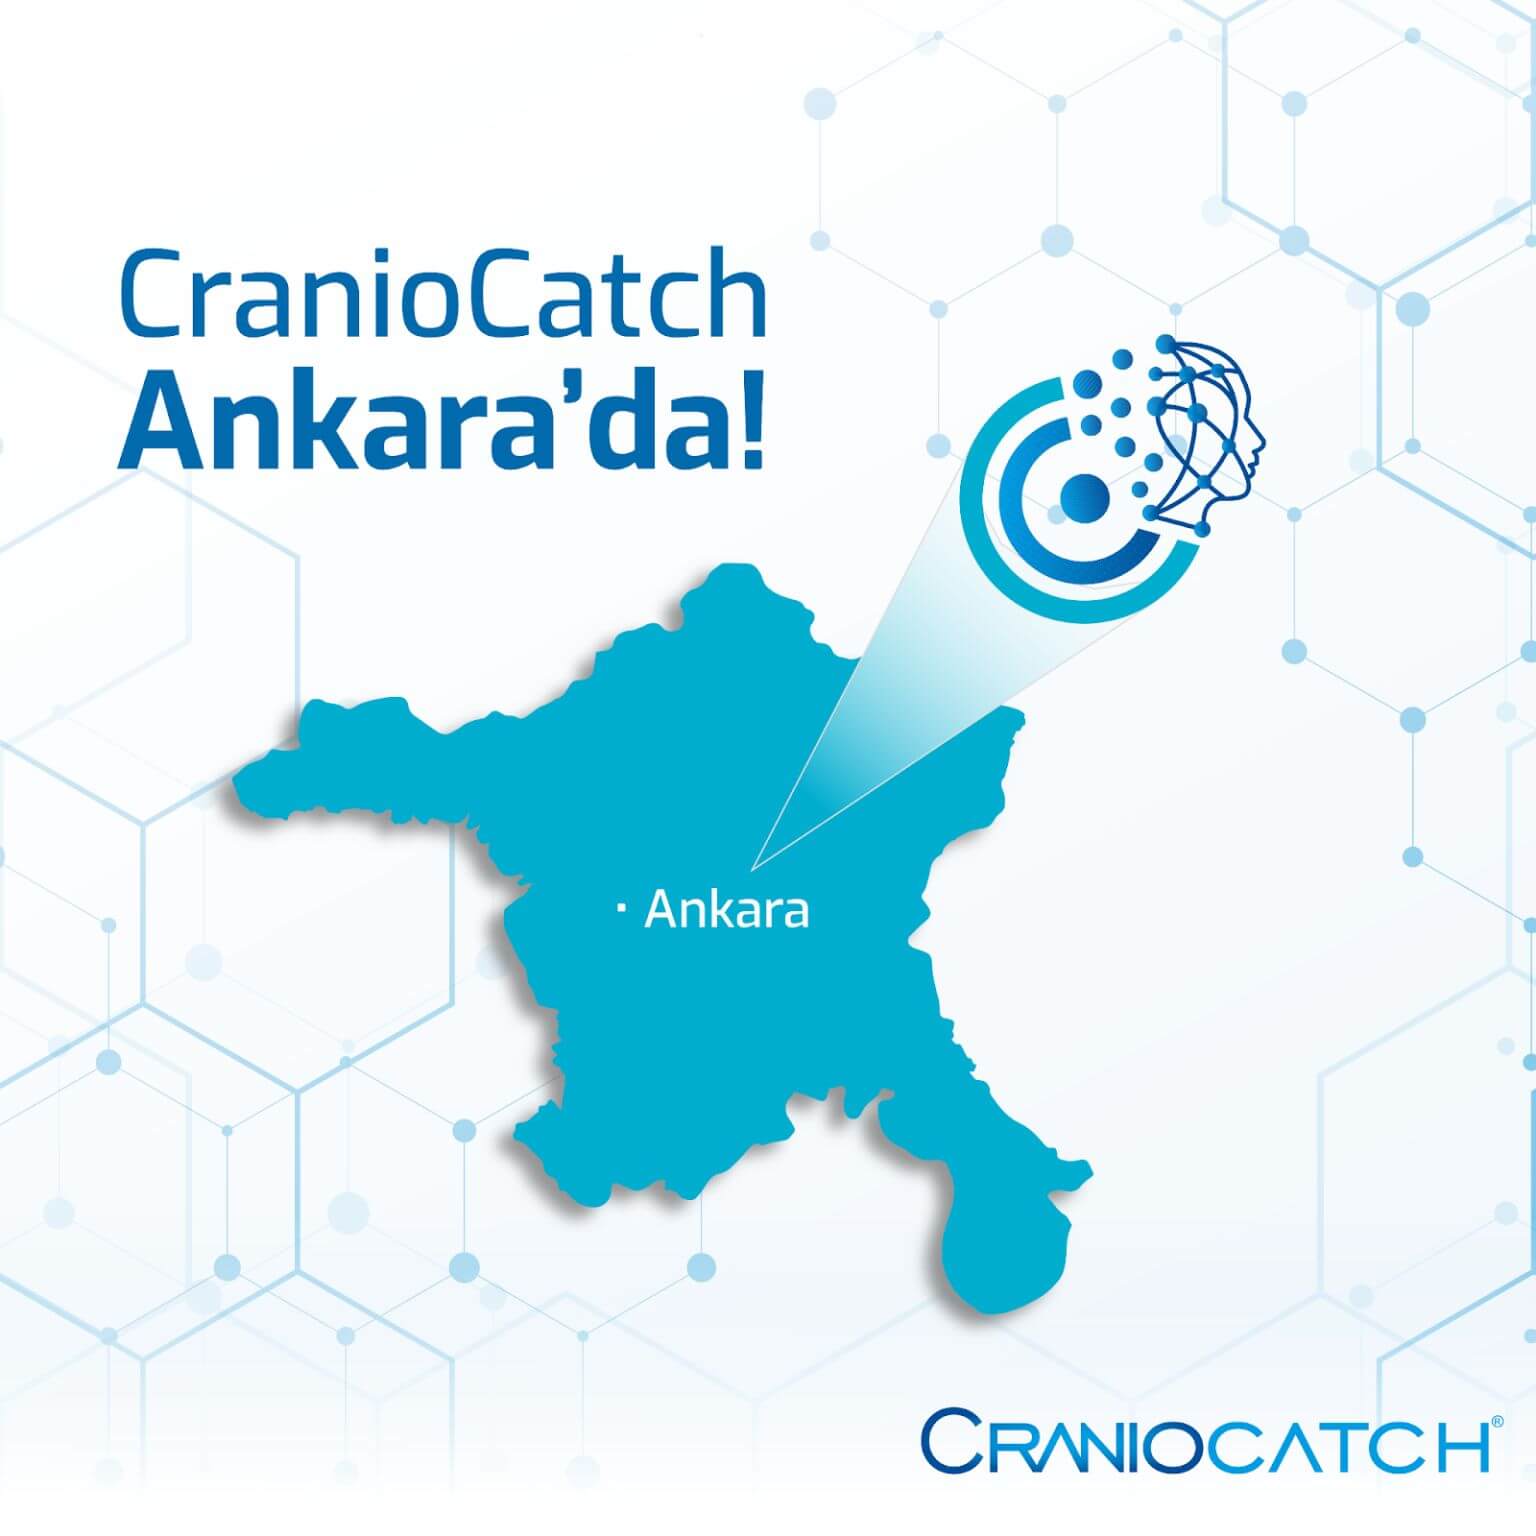 CranioCatch news and blog page-Ankara branch